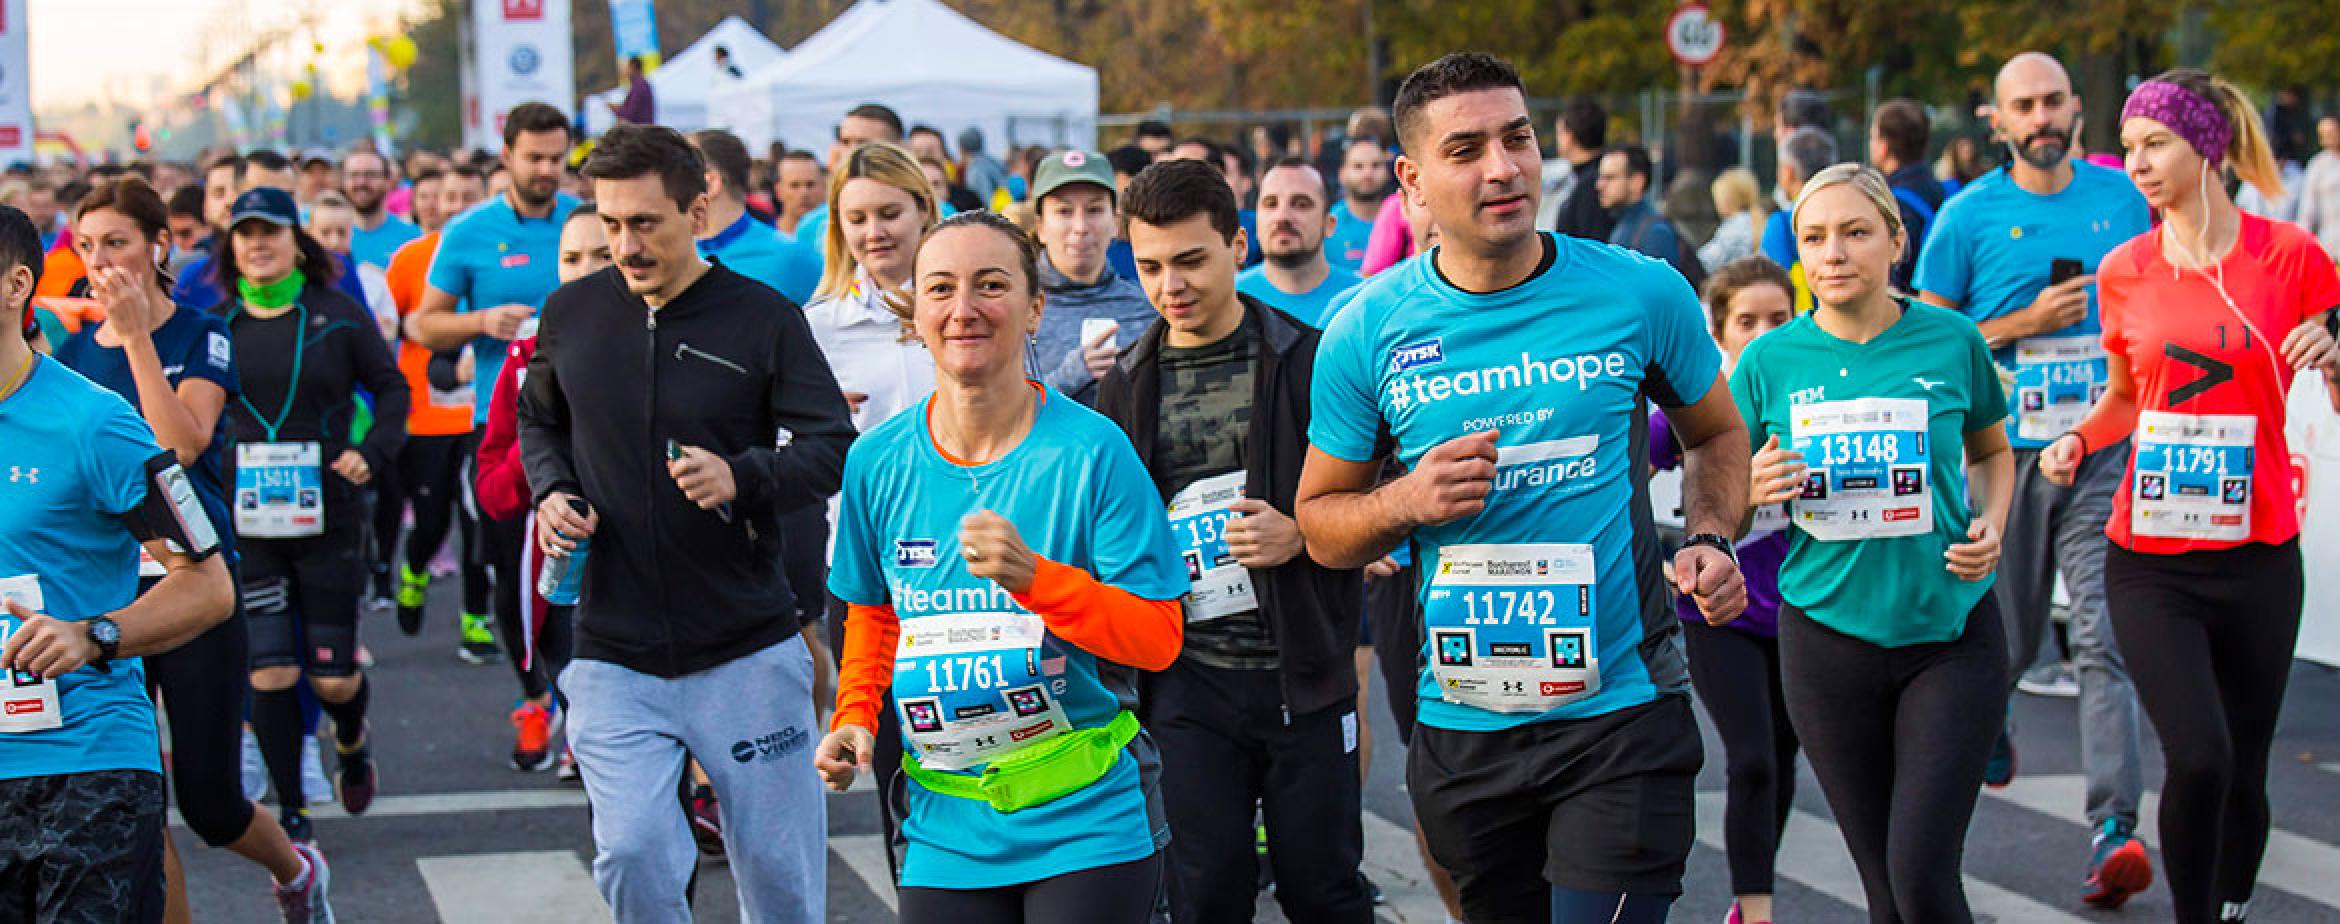 6 colegi au alergat pentru Team HOPE la Bucharest Marathon